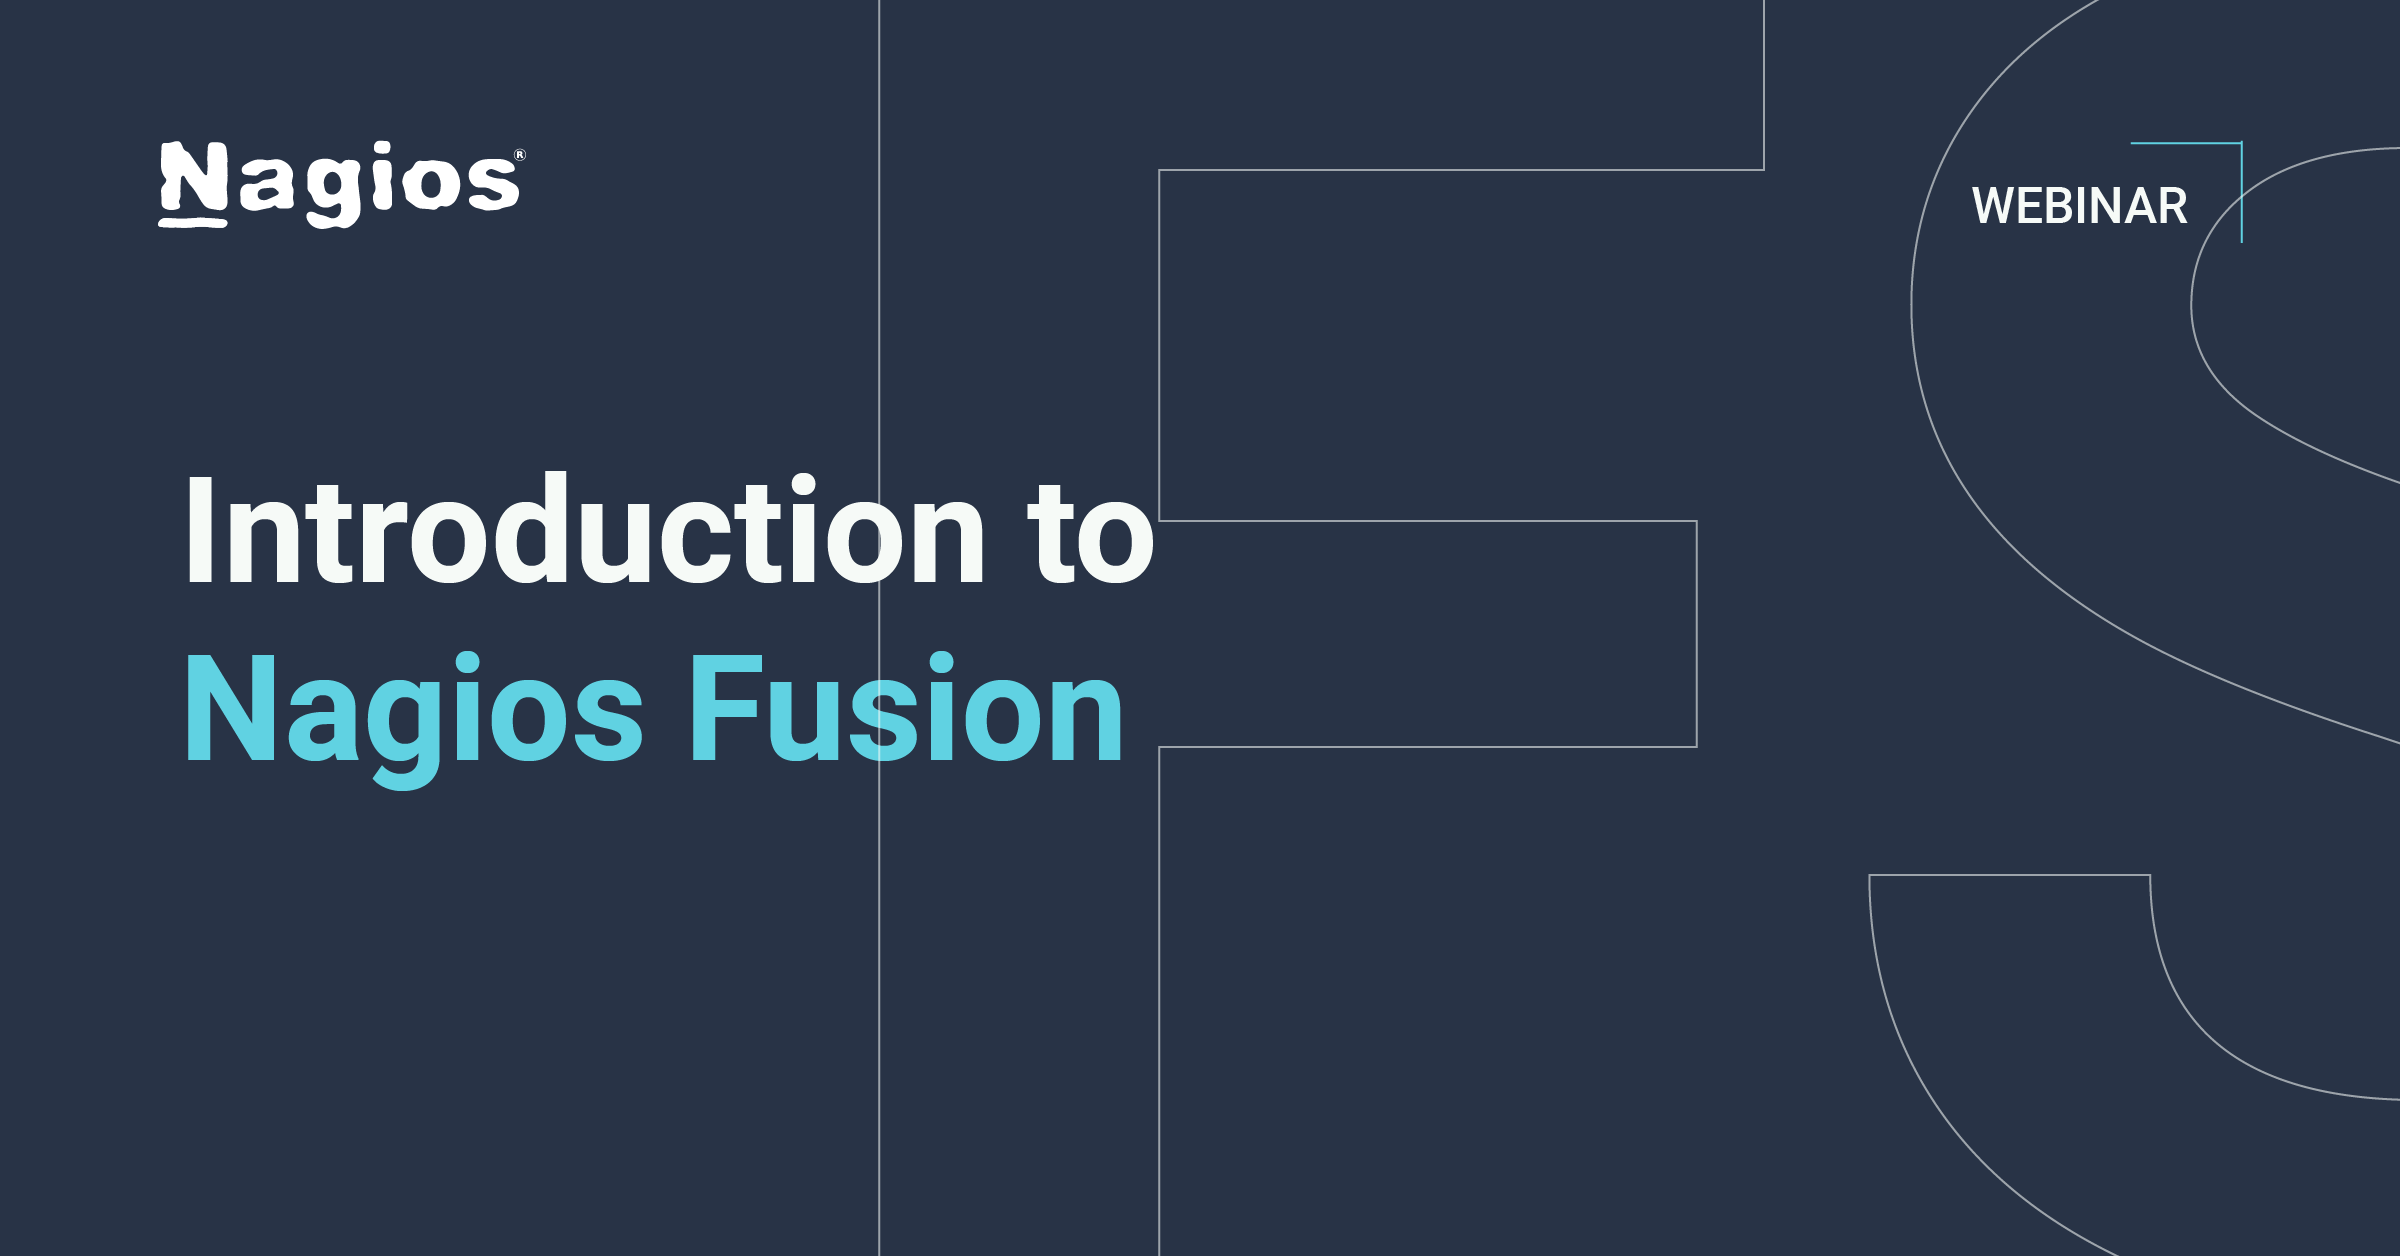 nagios webinars: introduction to nagios fusion